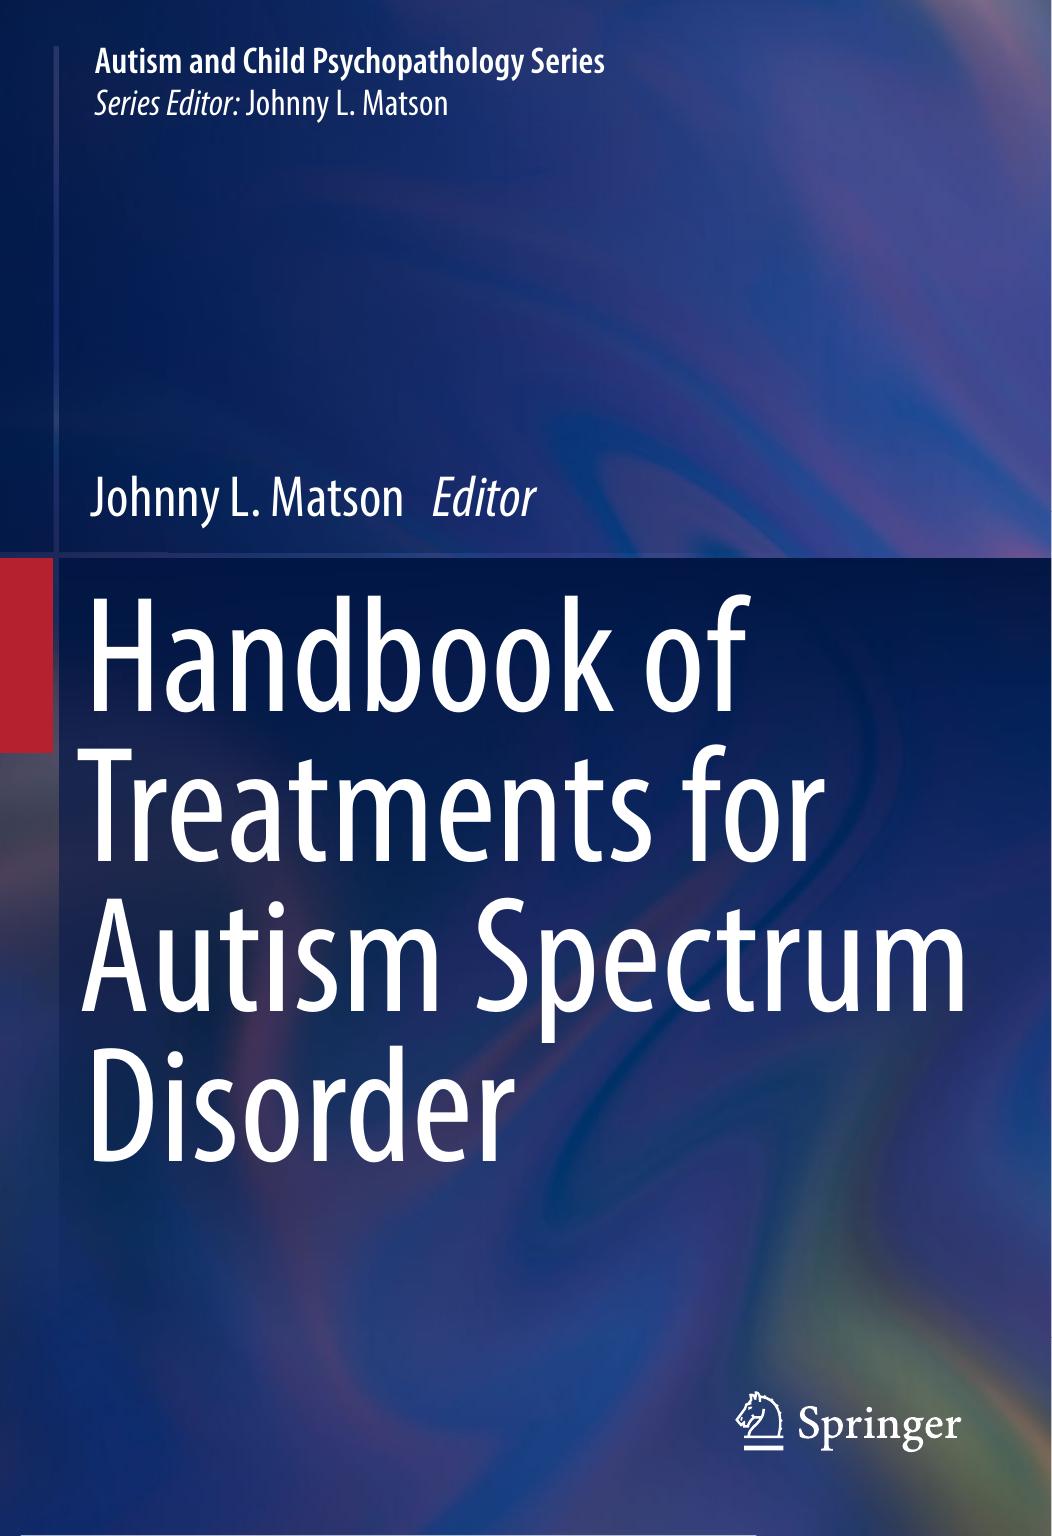 Handbook of Treatments for Autism Spectrum Disorder 2017